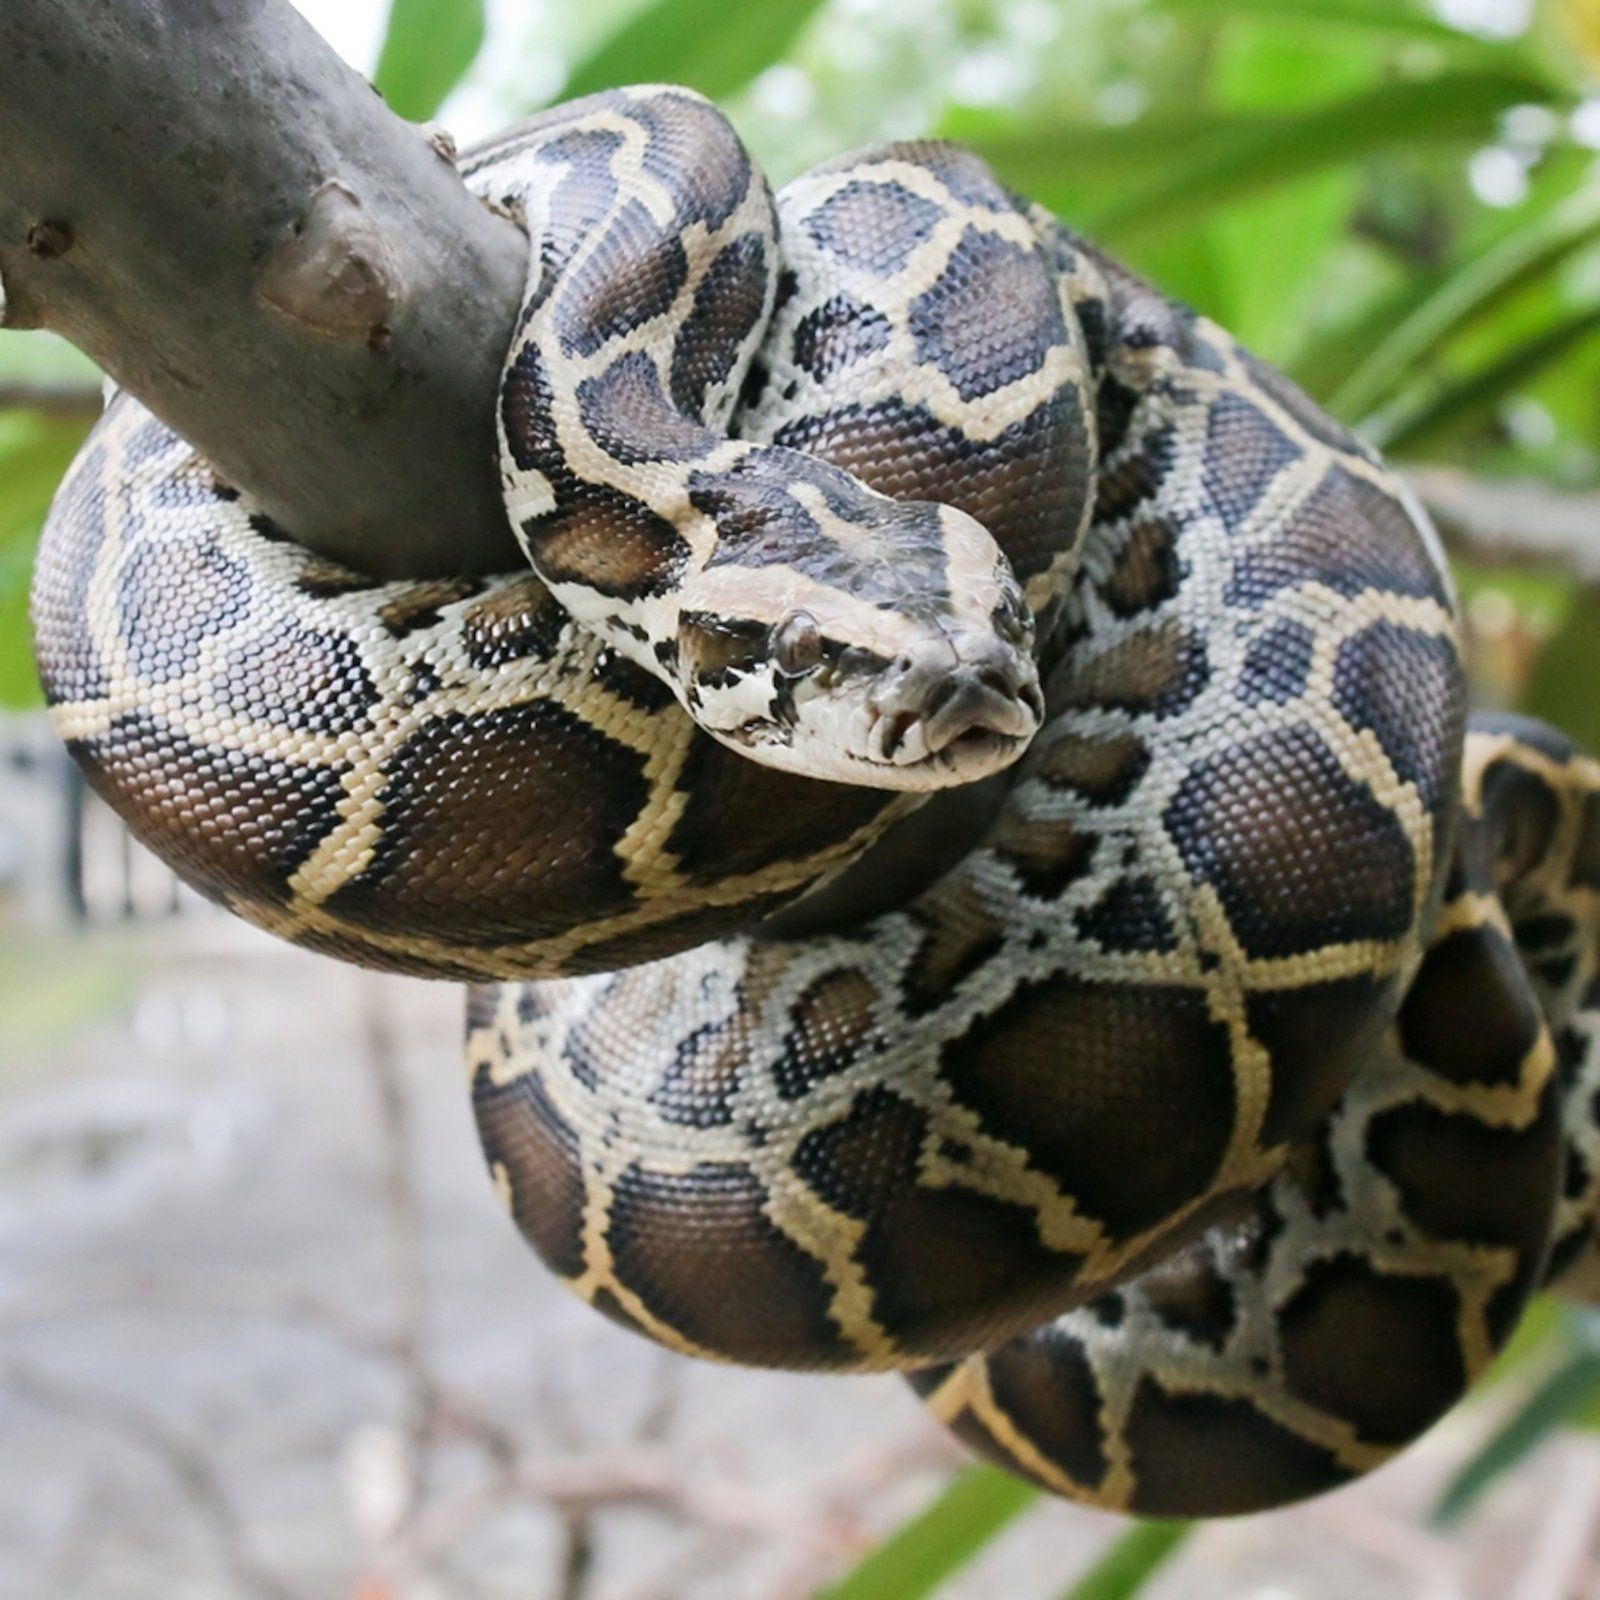 6 reasons why the Burmese python rocks